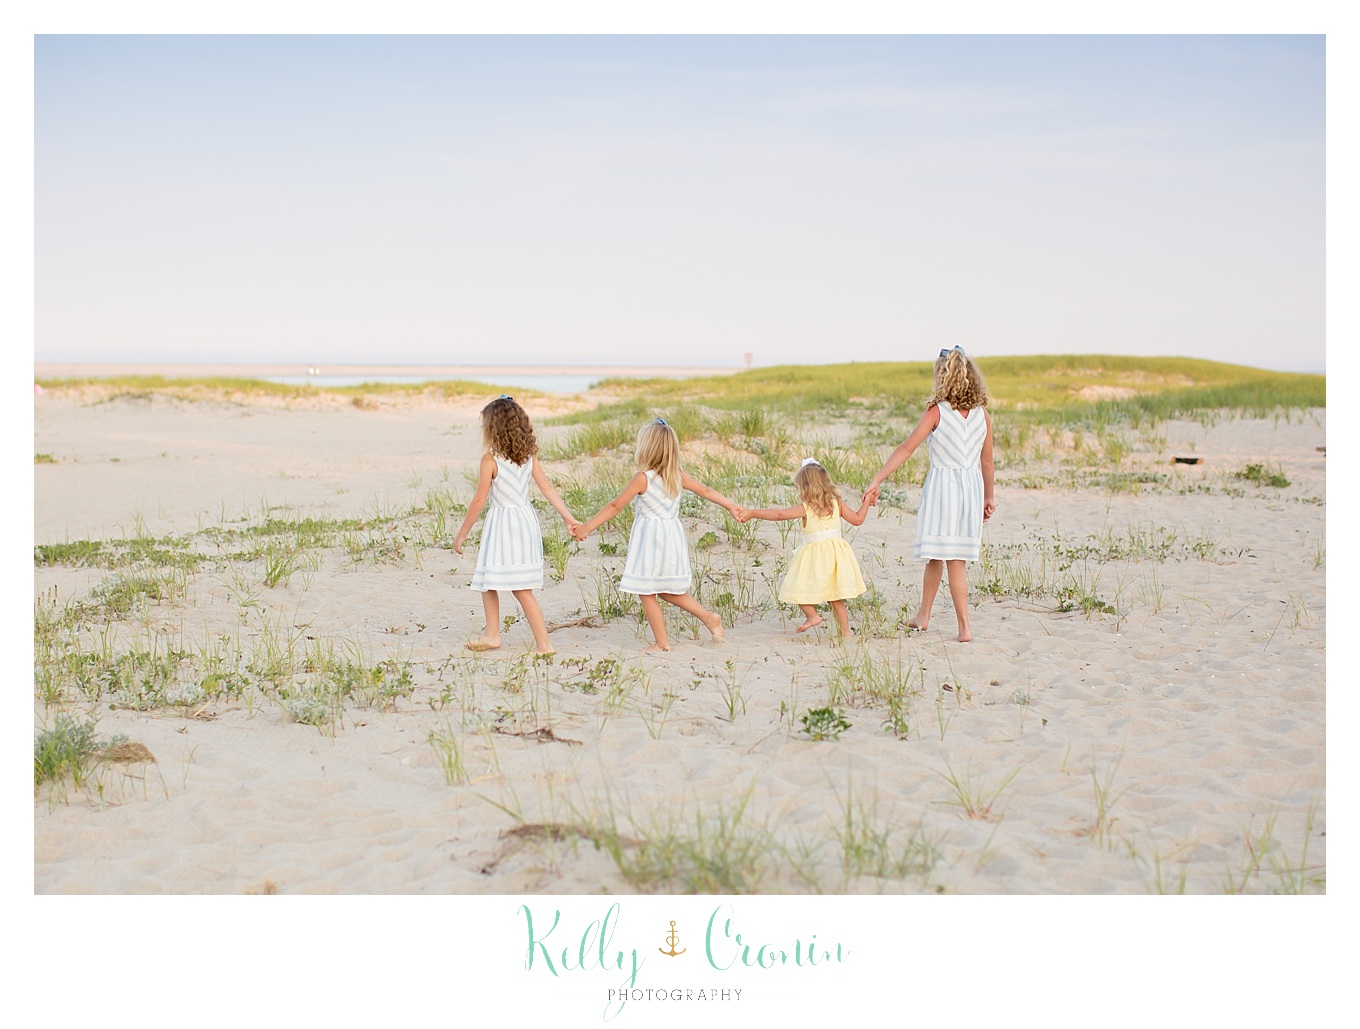 Four young girls walk along the beach, holding hands.